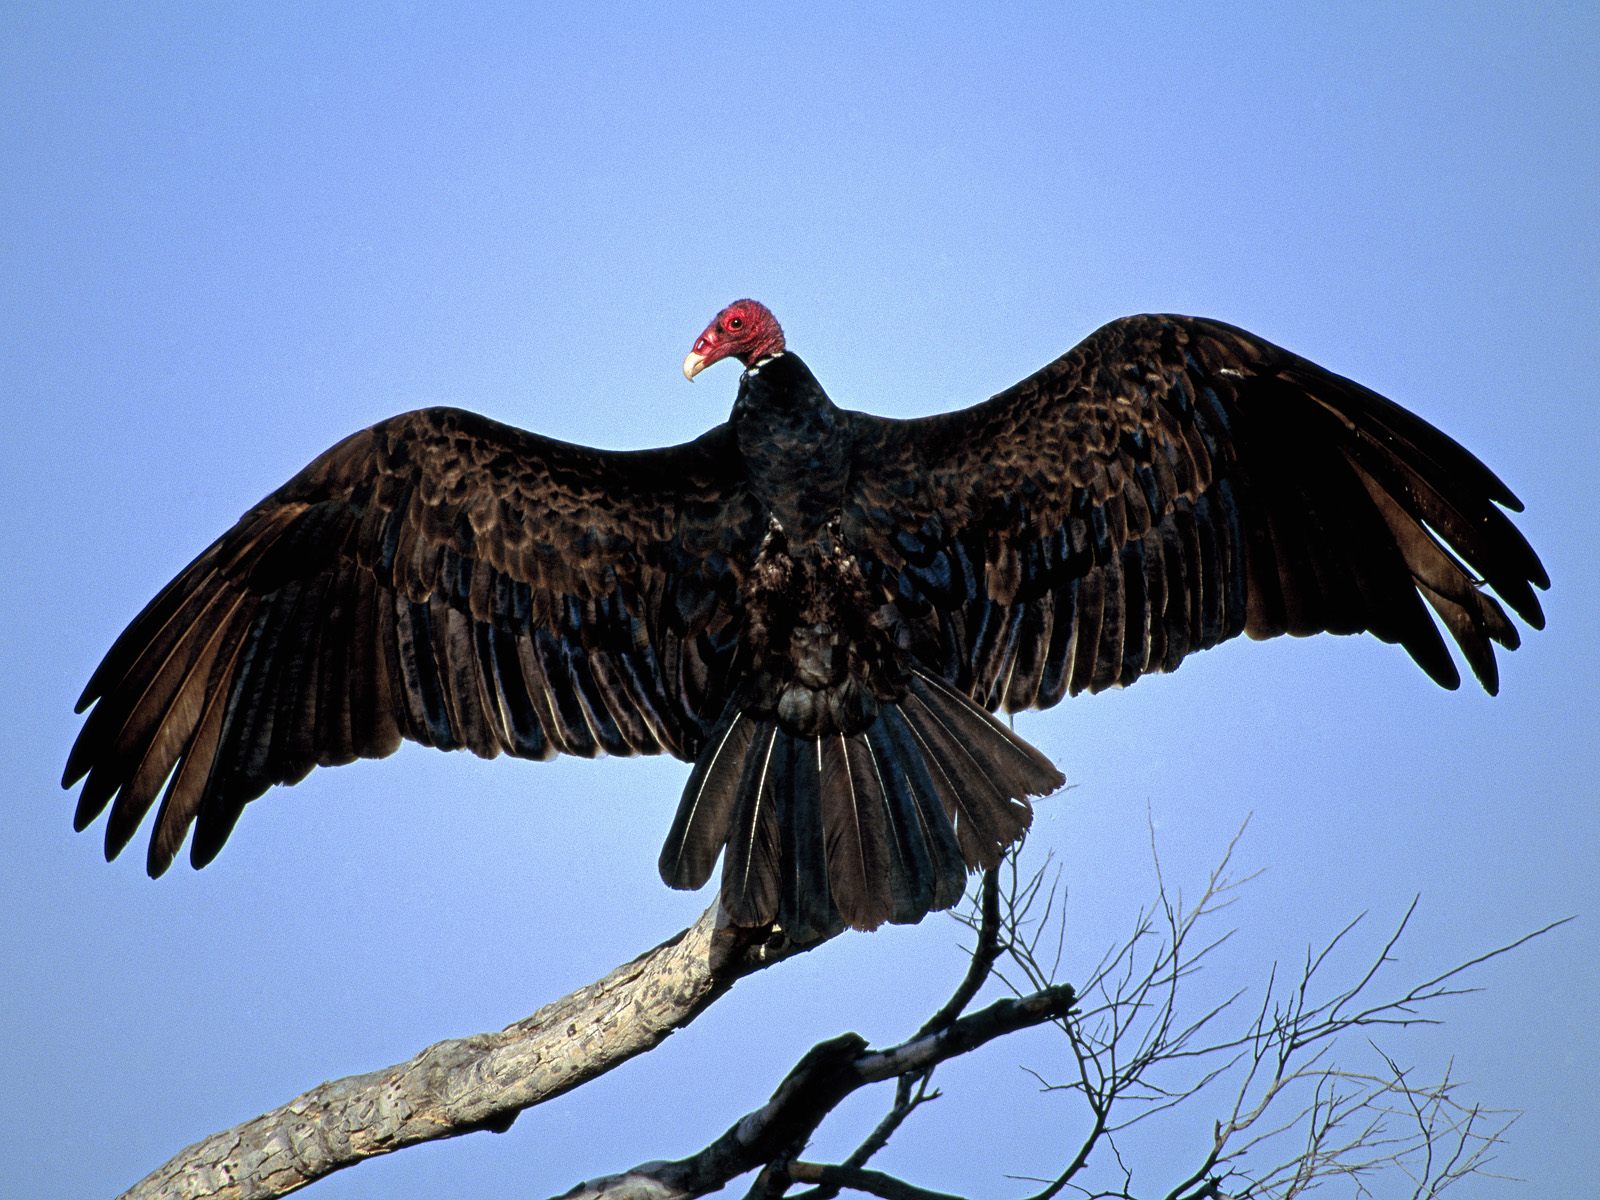 http://1.bp.blogspot.com/-M9qmbjUUFGU/TdXK8vA2bcI/AAAAAAAAAMM/dvV4IbGuIDg/s1600/turkey_vulture+on+tree.jpg